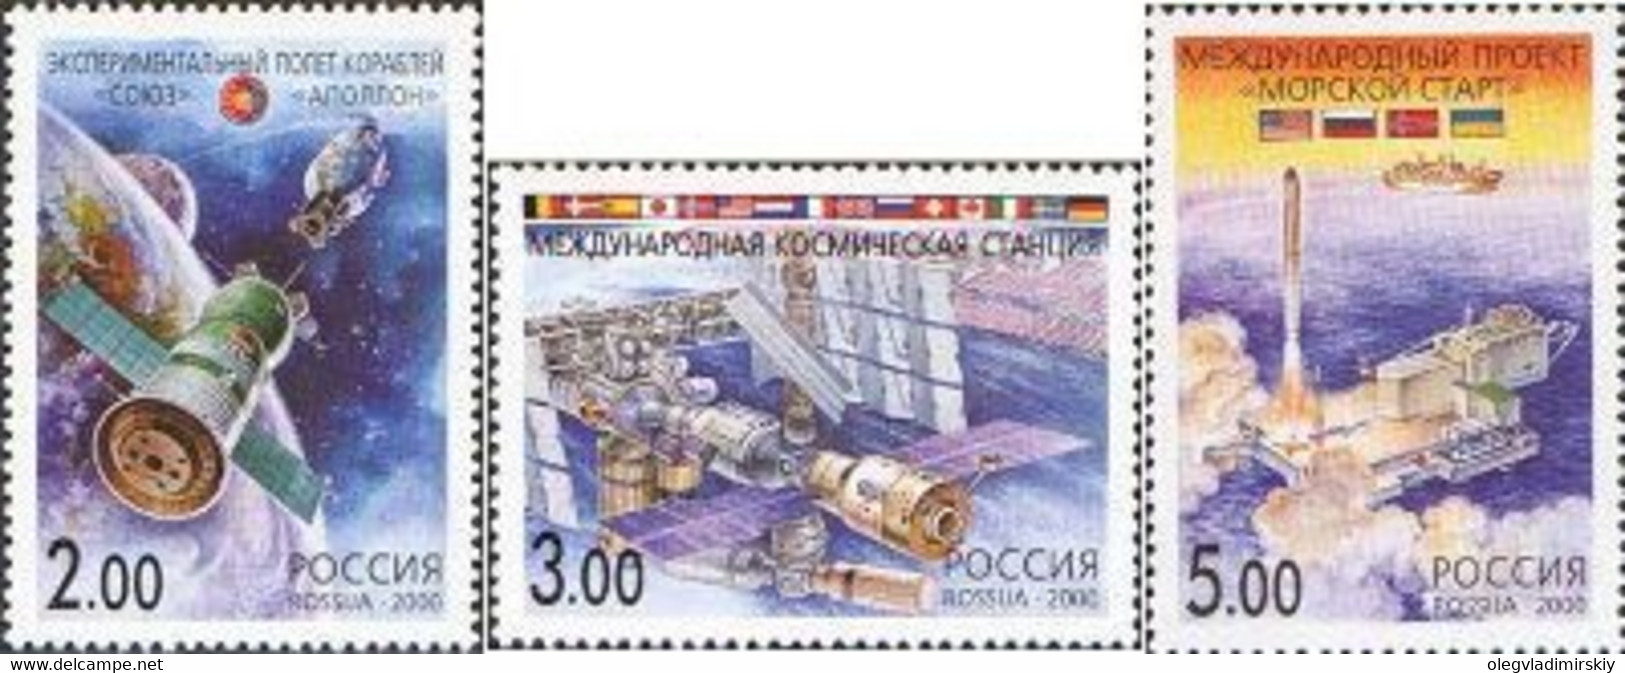 Russia 2000 Cosmonautics Day Set Of 3 Stamps - Verenigde Staten